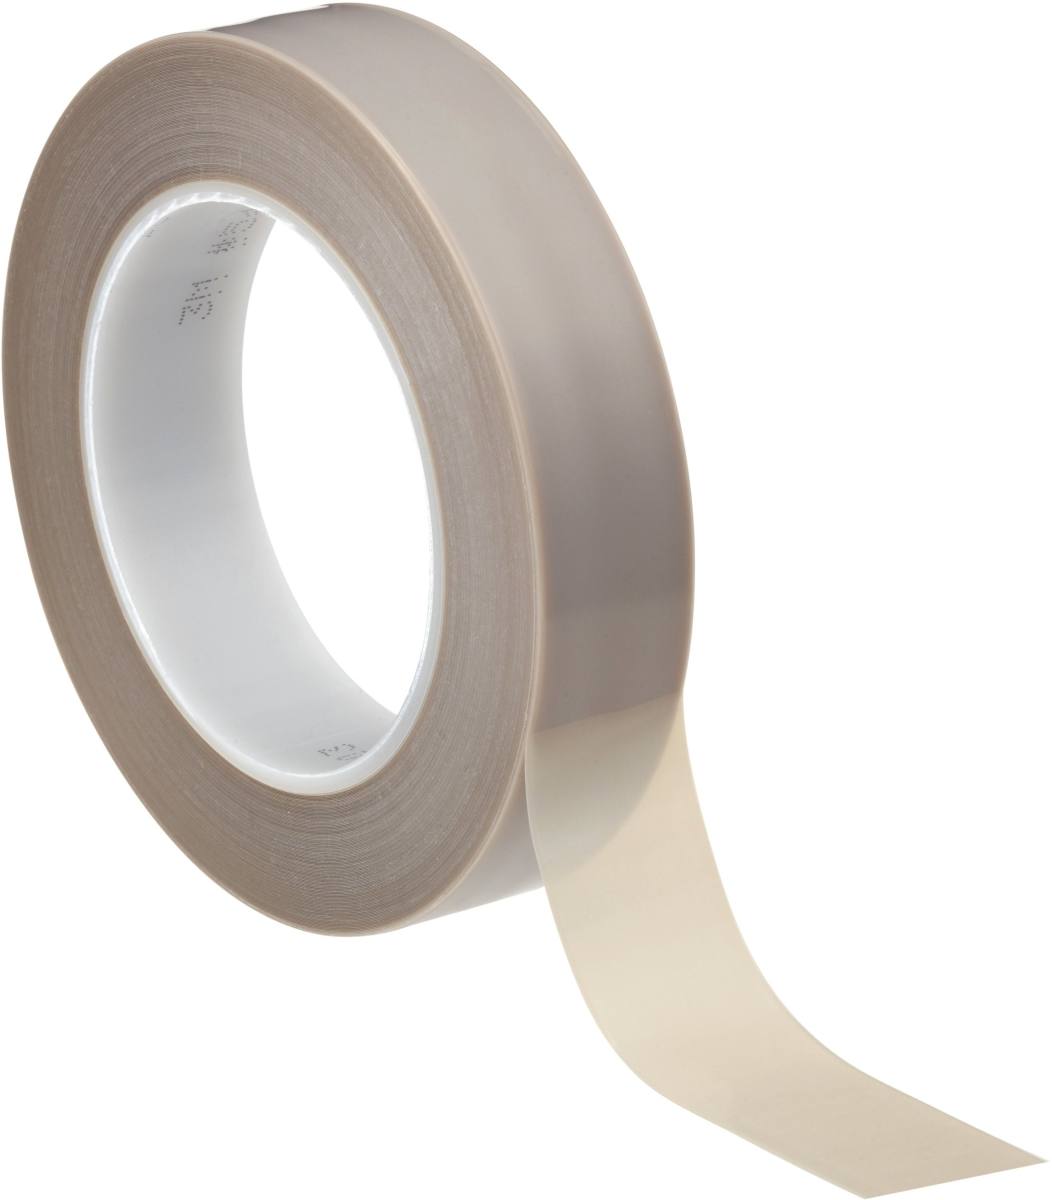 3M 5480 PTFE film adhesive tape 6mmx33m, 0.10mm, silicone